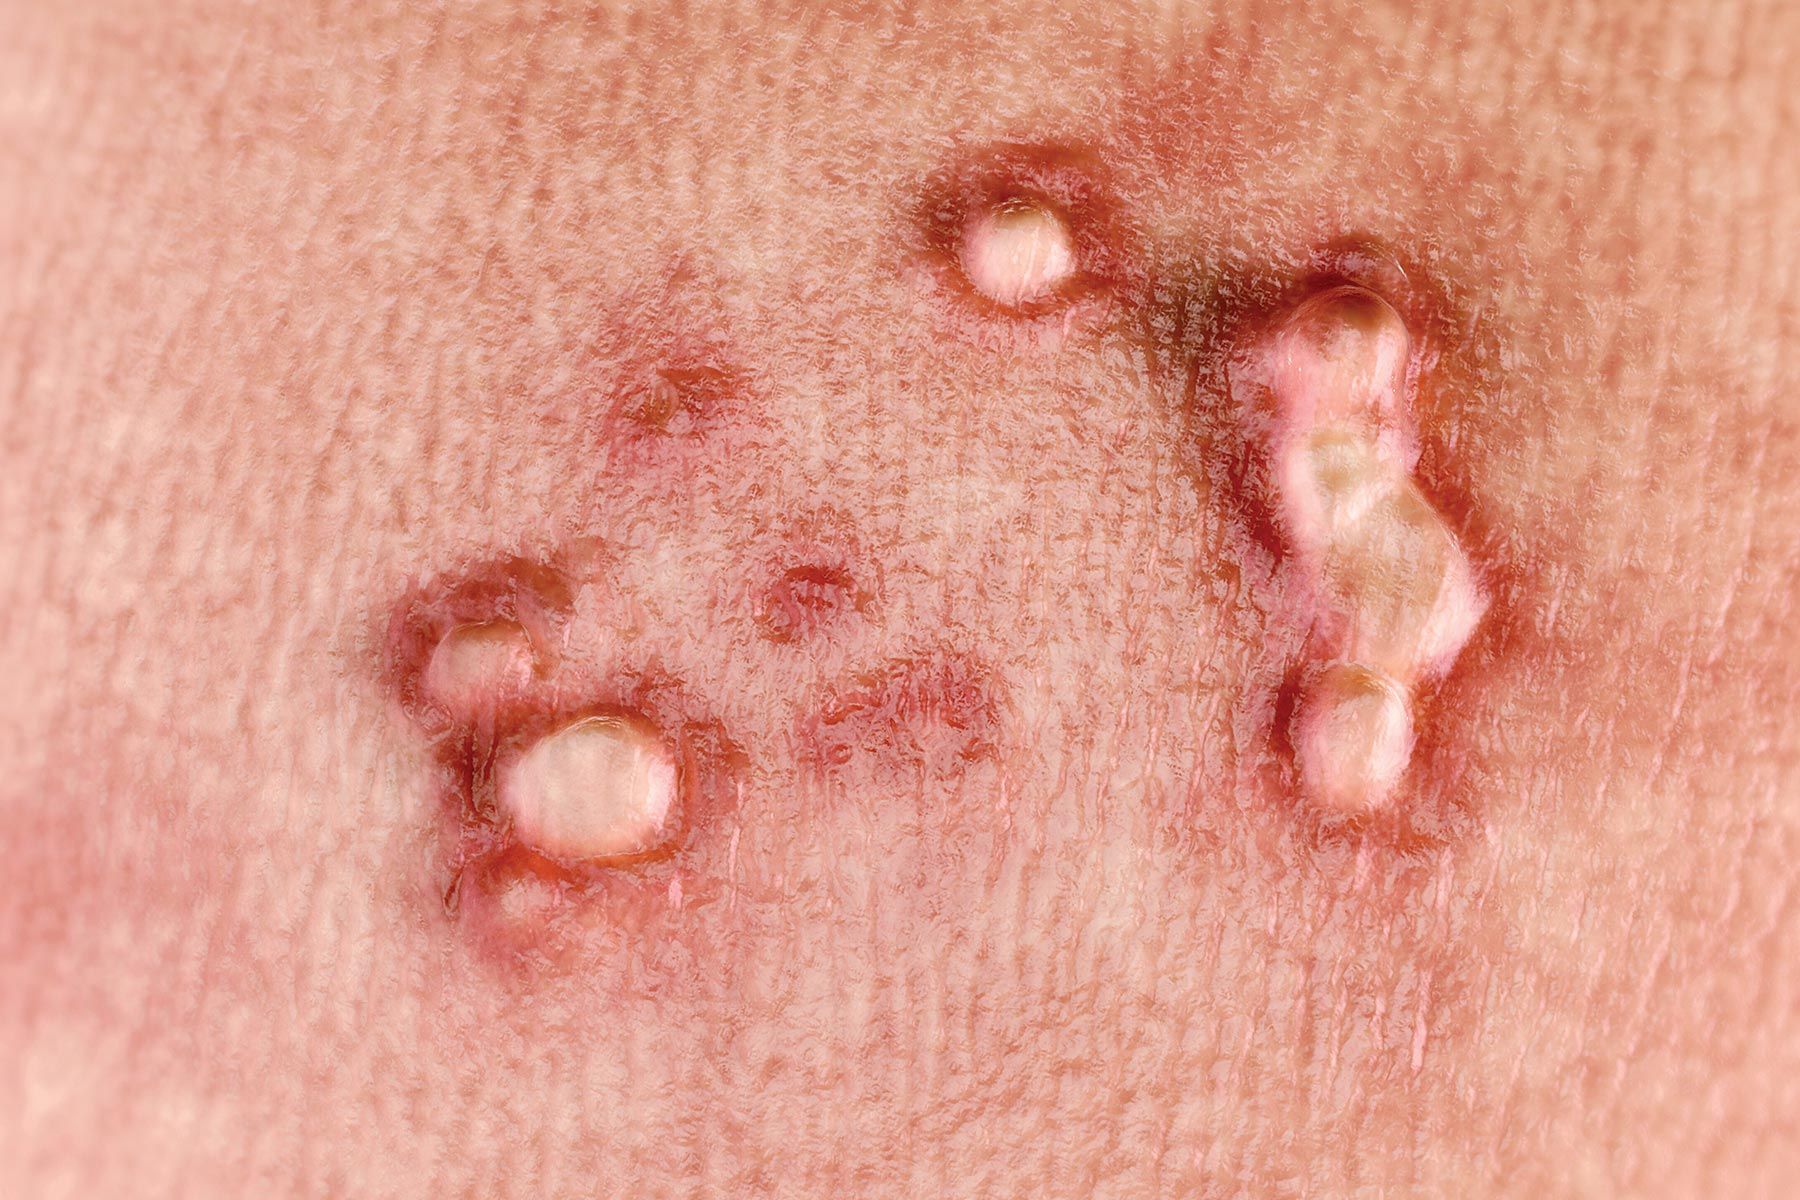 Warts on hands sign of hiv. Translation of 